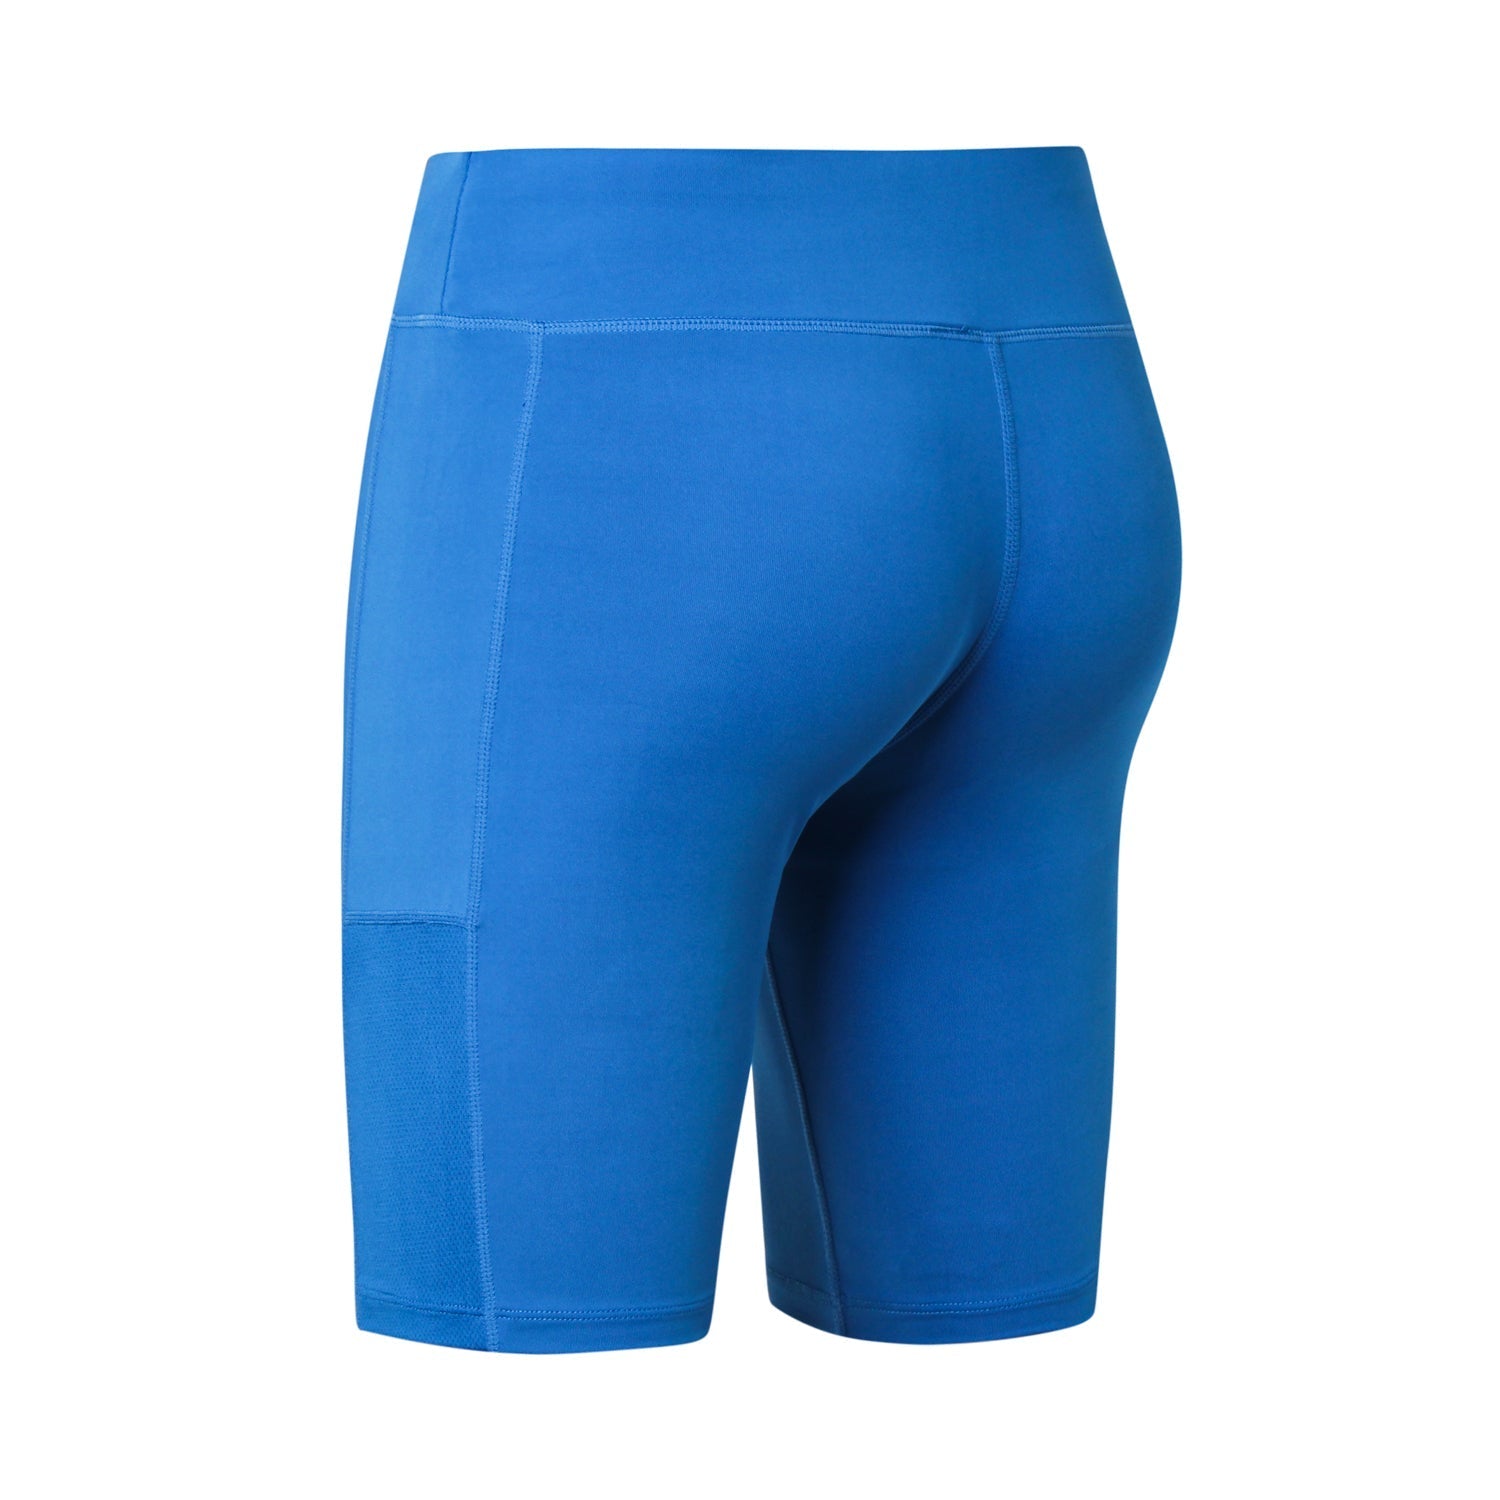 Womens High Waist Workout Shorts with Pockets Yoga Running Compression Shorts LANBAOSI